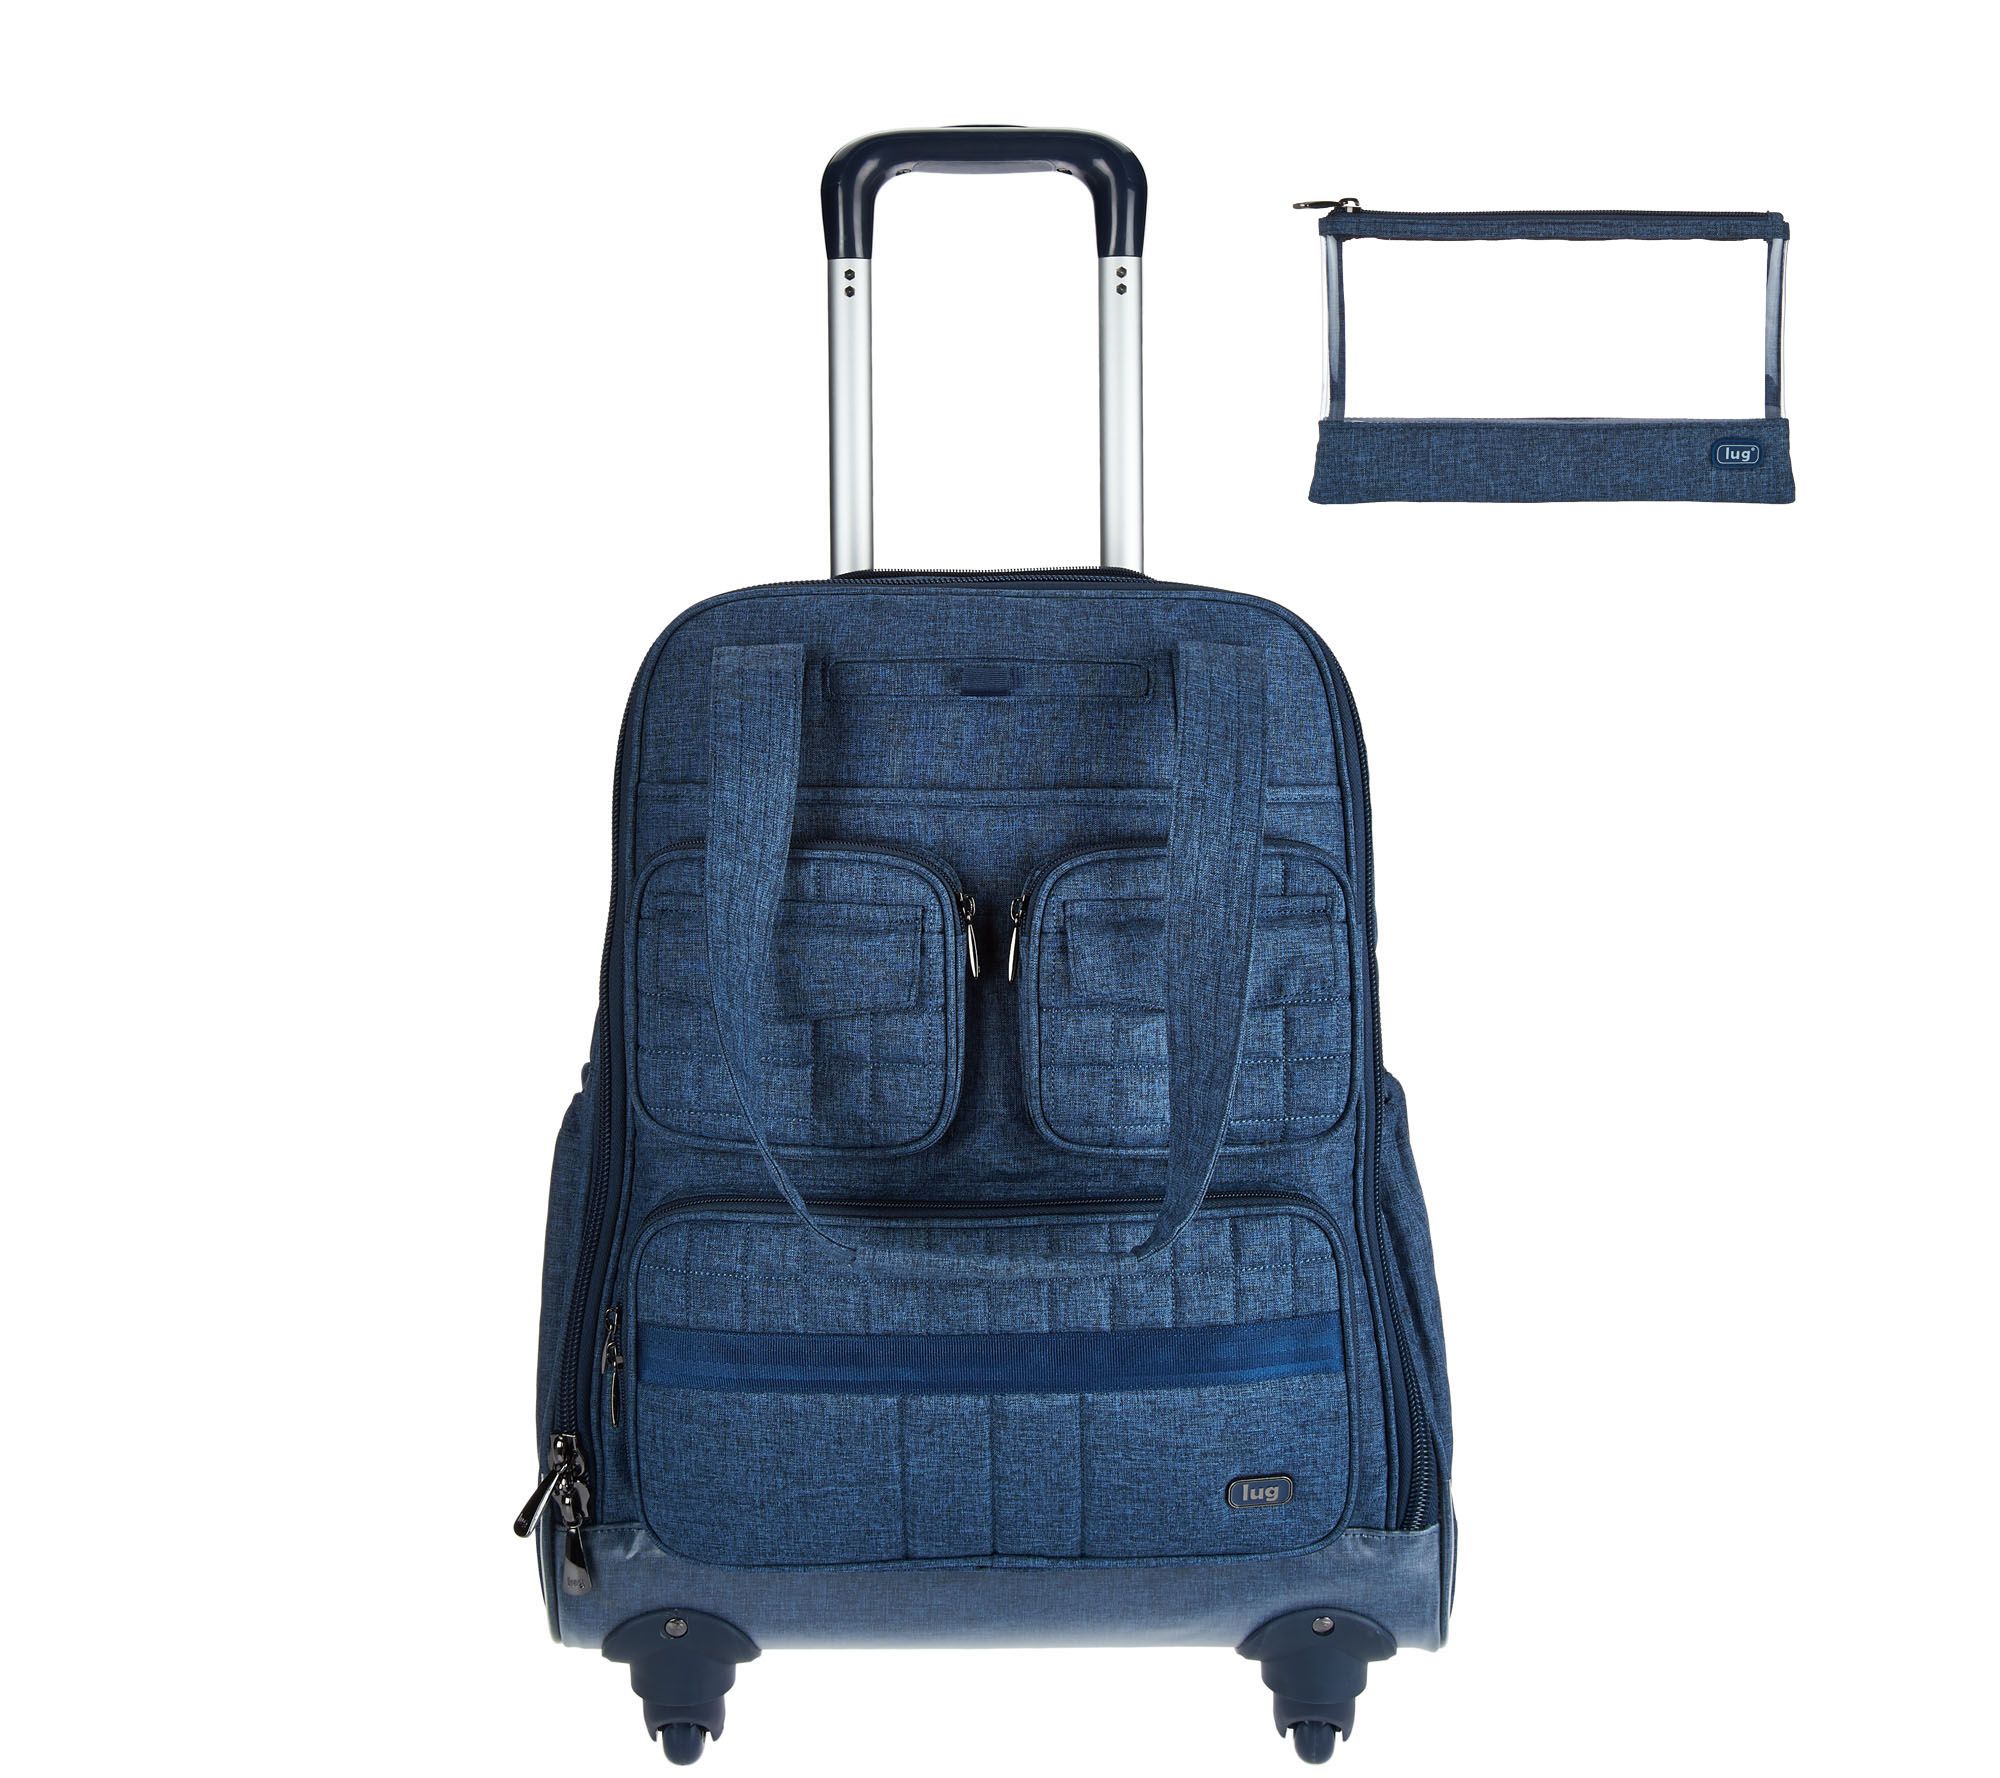 Lug Travel Bags for Women — Handbags & Luggage — 0